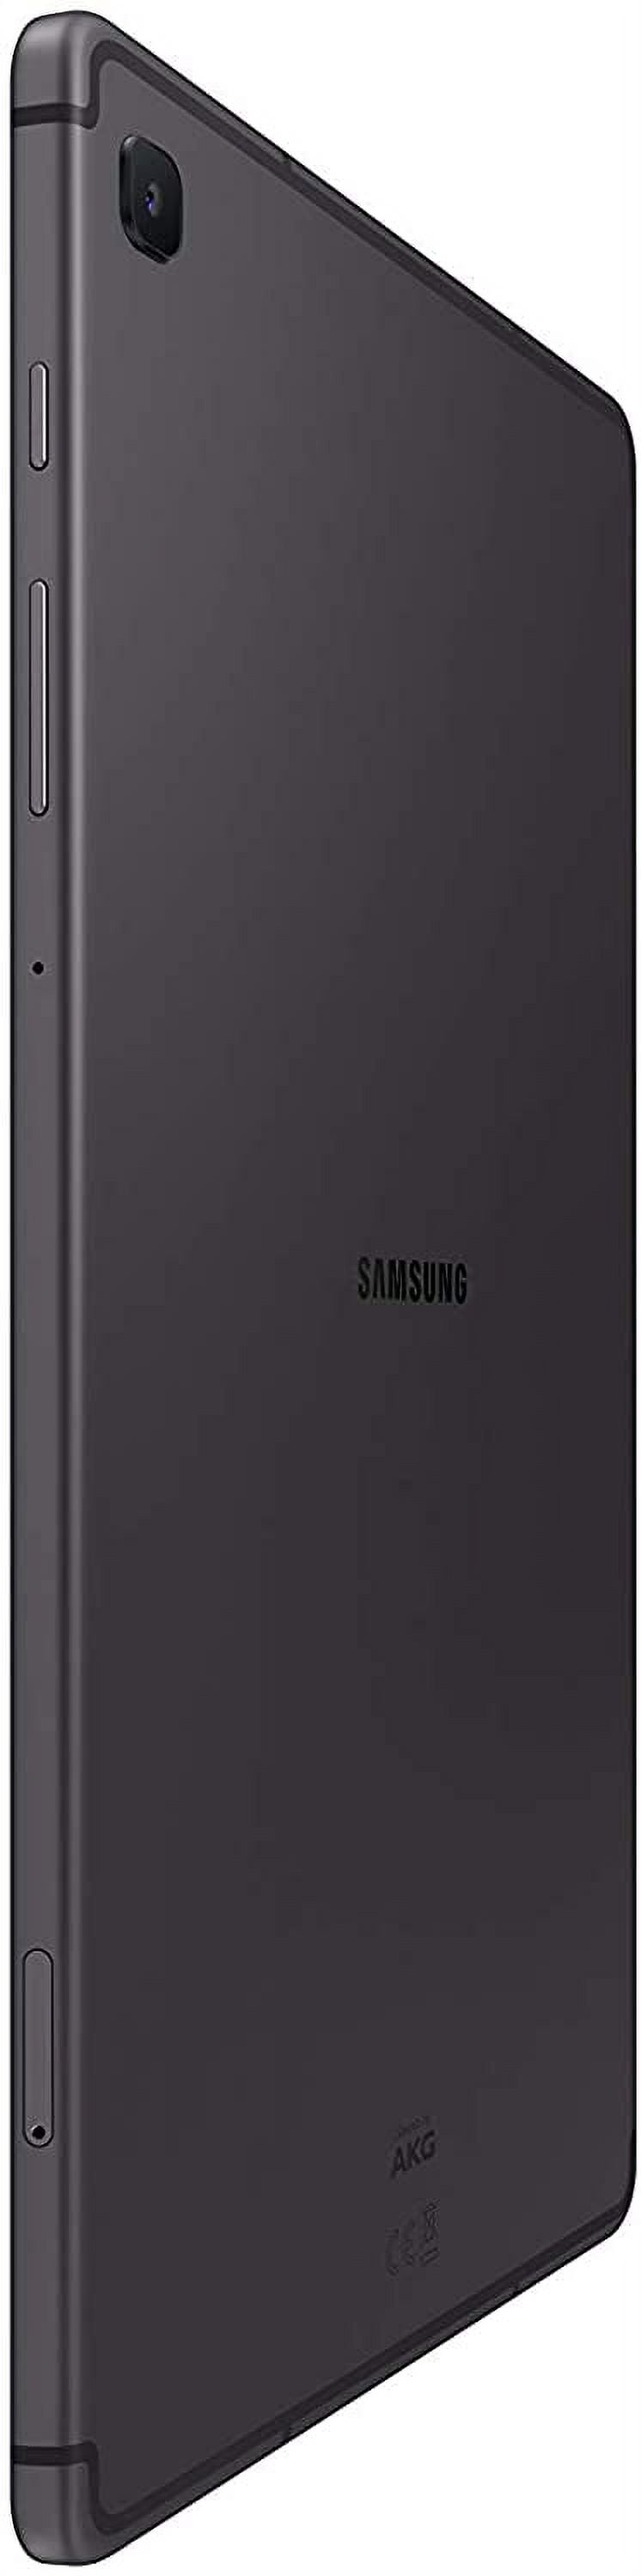 Samsung Galaxy Tab S6 Lite 10.4 64GB Oxford Gray SM-P610NZAAXAR - Best Buy